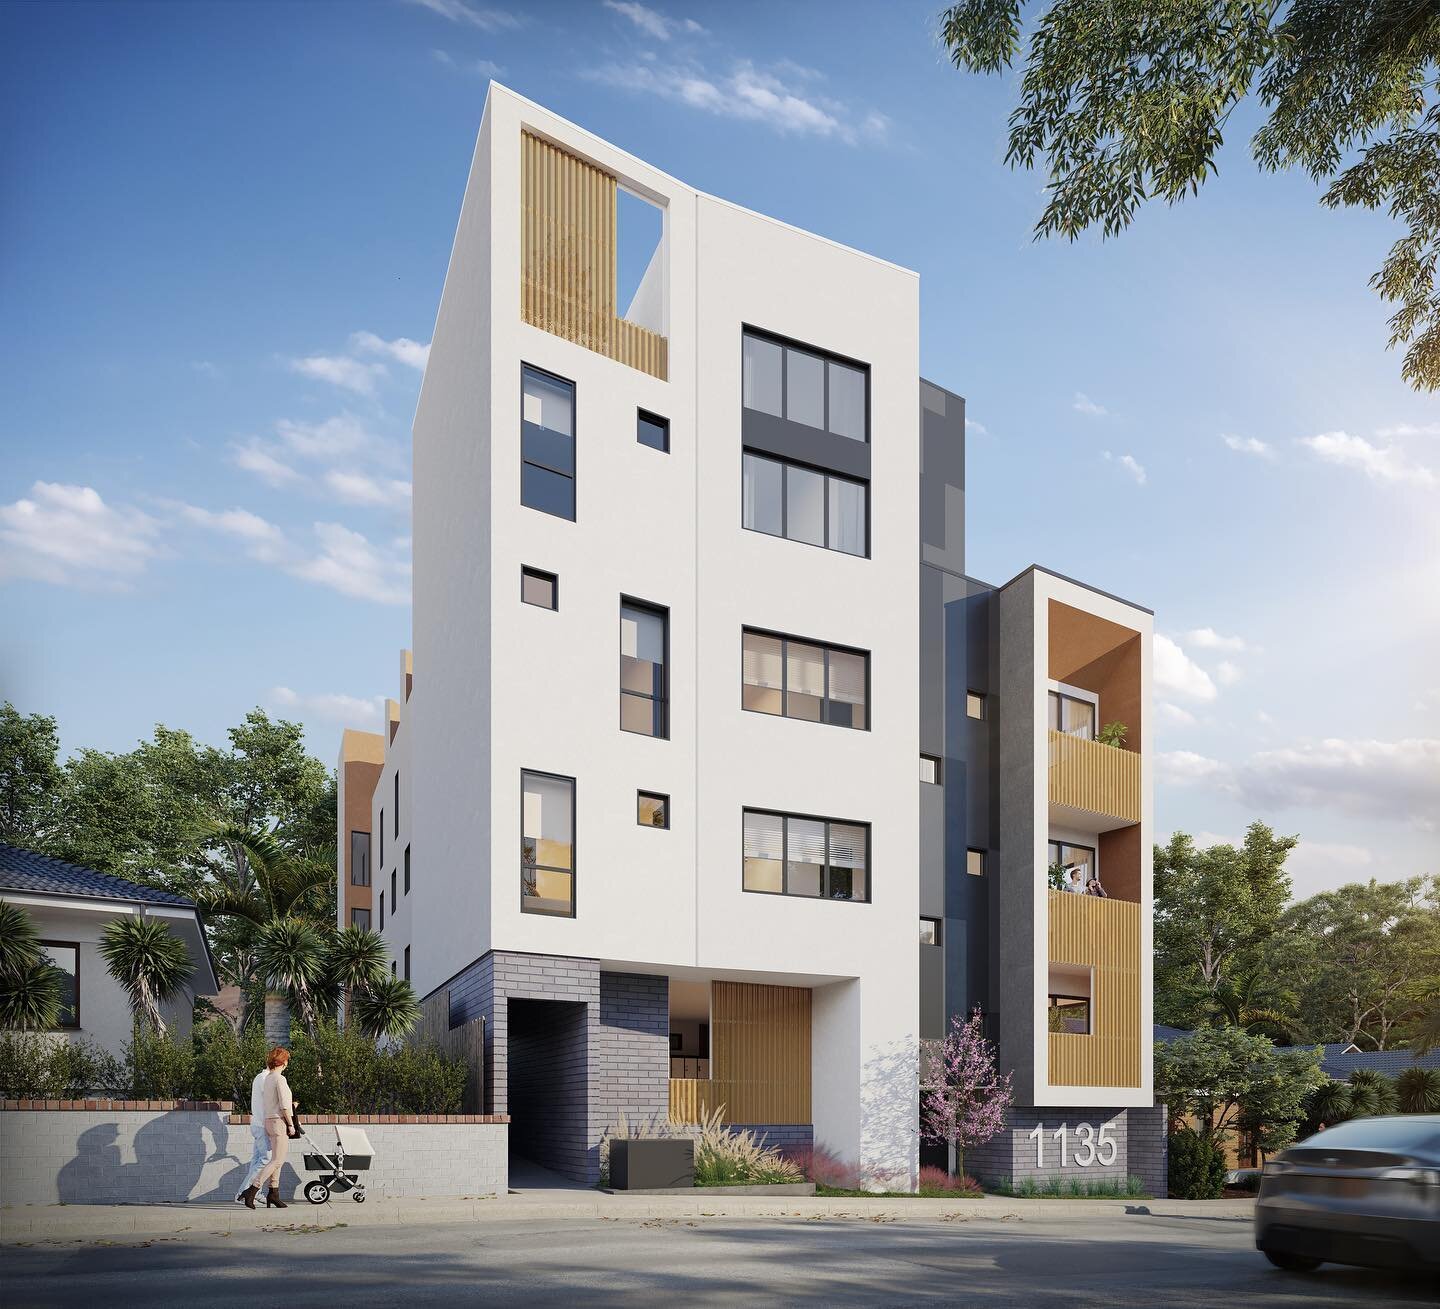 18 unit affordable housing development 

(5) 3-Bedroom
(5) 2-Bedroom
(1) 2-Bedroom + Mezzanine&nbsp;
(4) 1-Bedroom + Mezzanine
(1) 1-Bedroom
(2) Studio&nbsp;

#sandiegohousing #architecture #sandiegoaffordablehousing #desing #multifamilyarchitecture